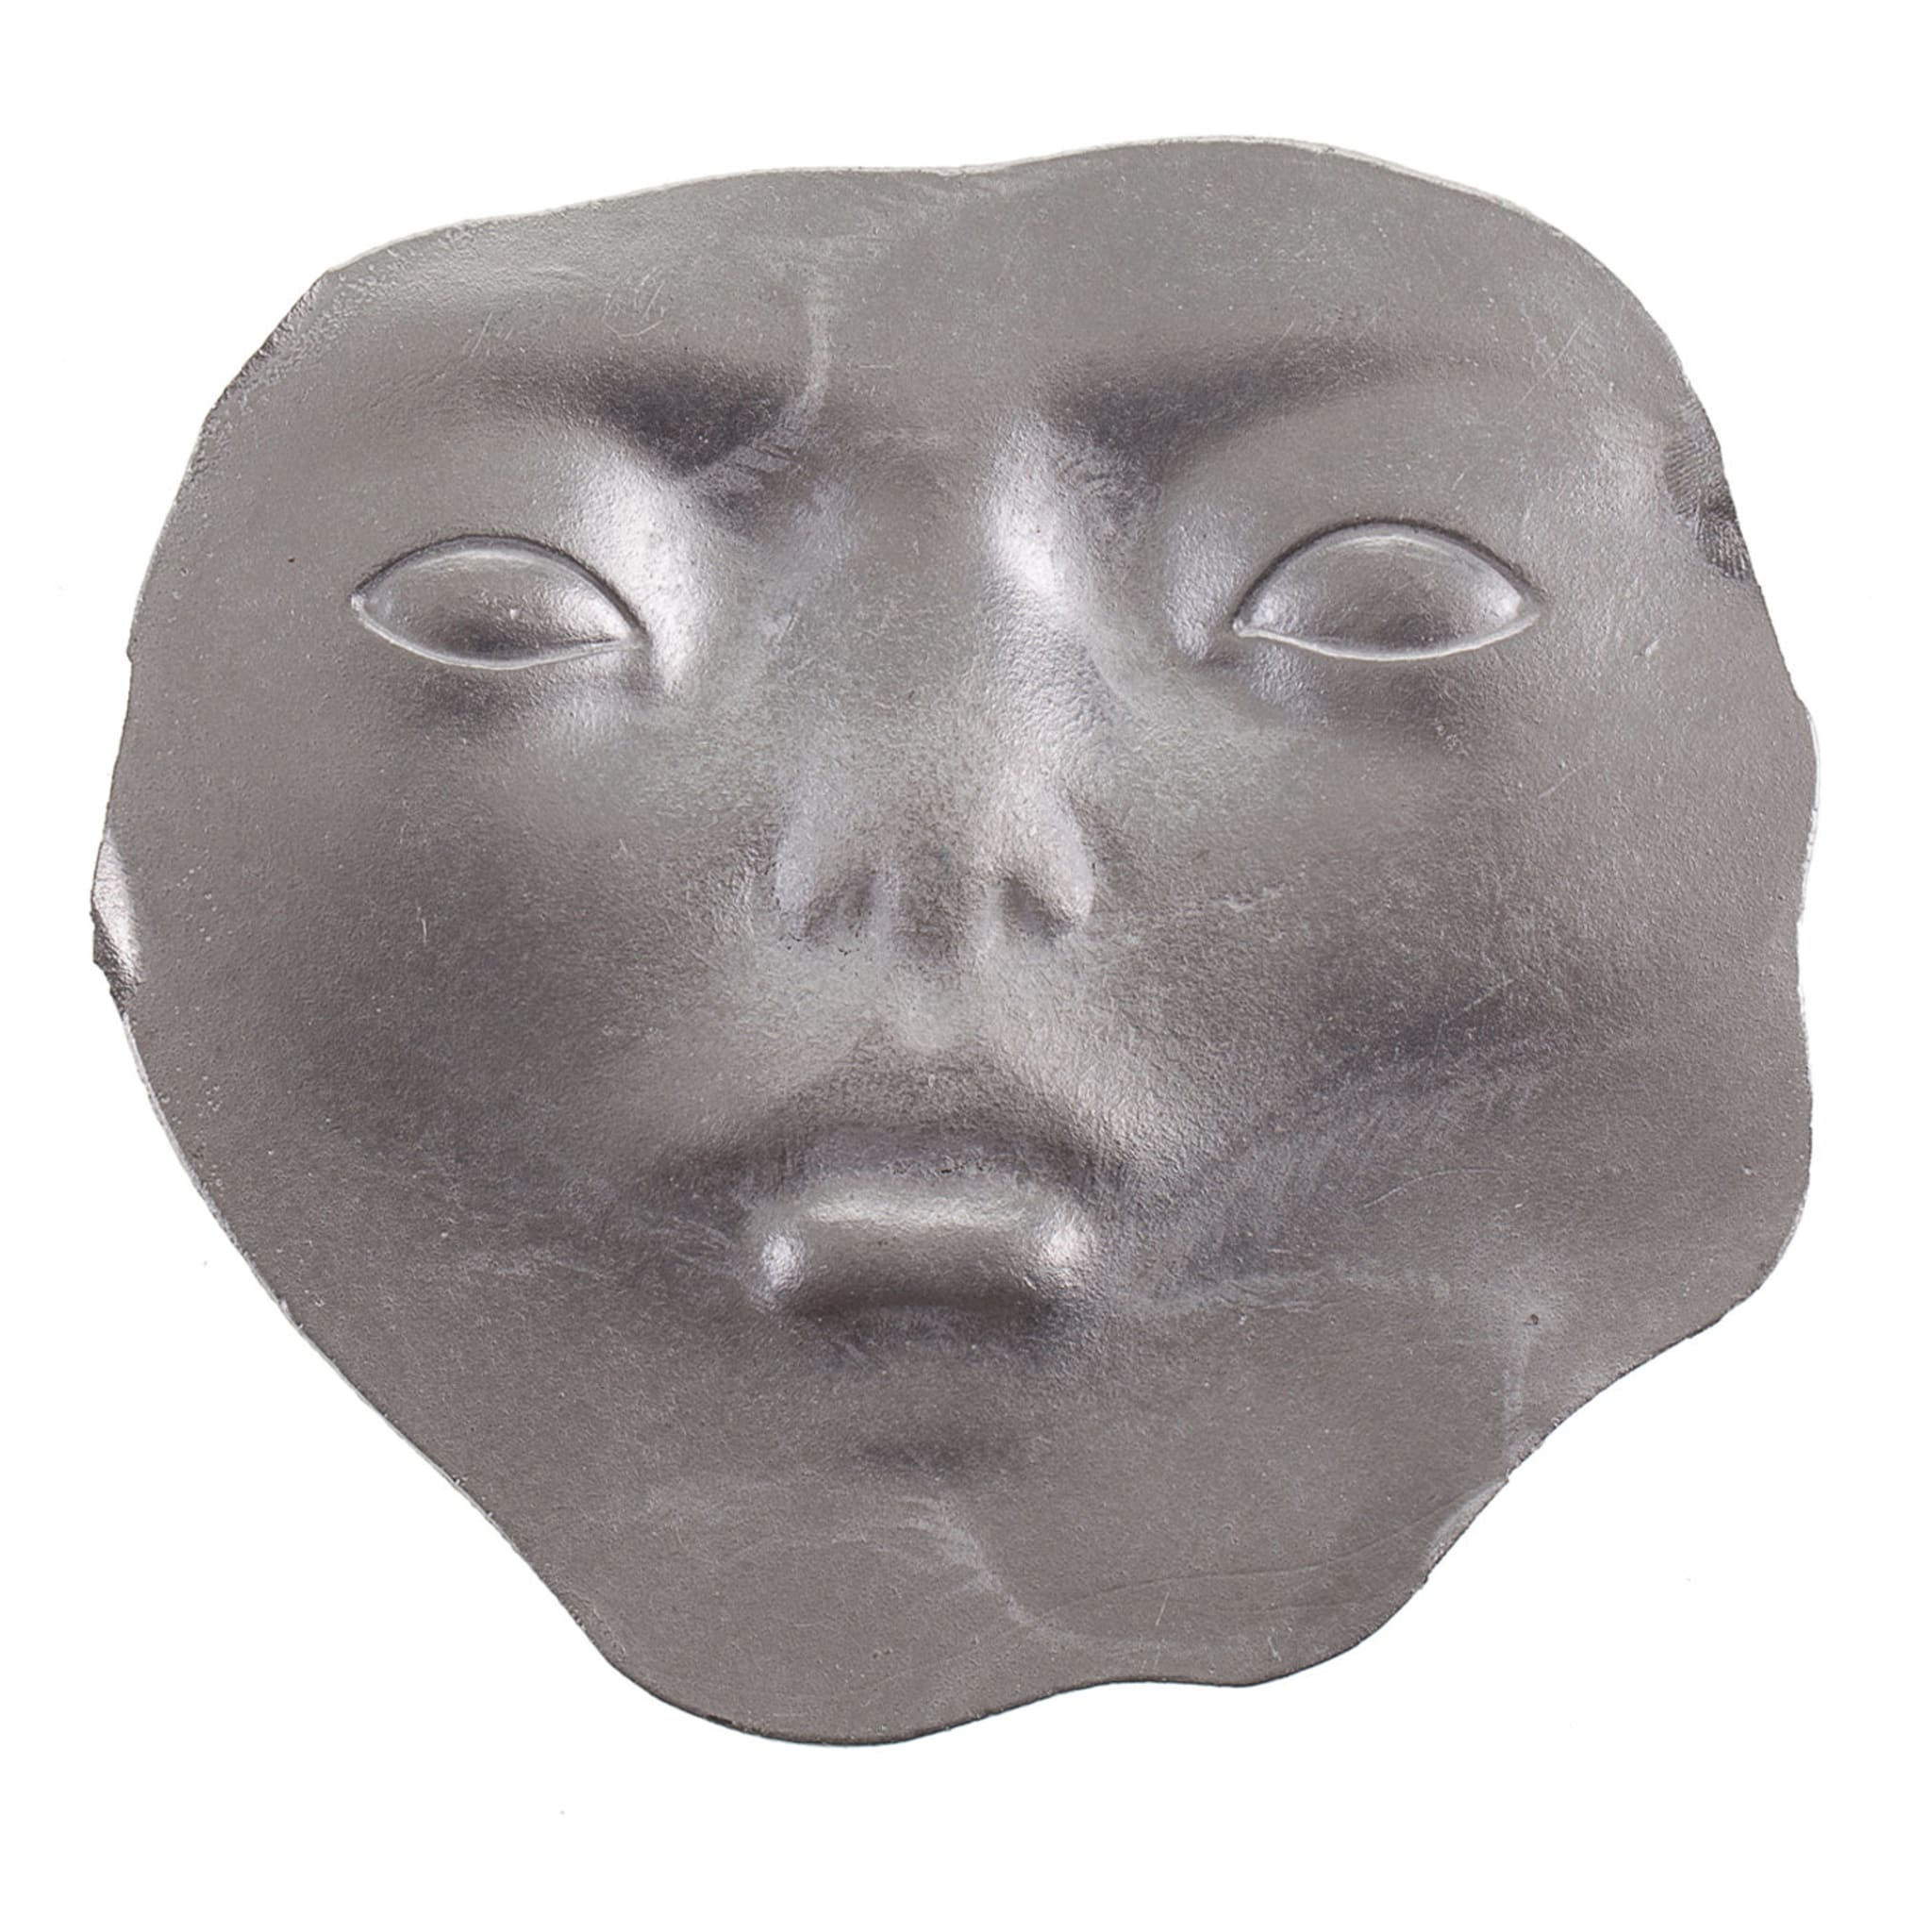 Sculpture de fragments de visage humain - Vue principale